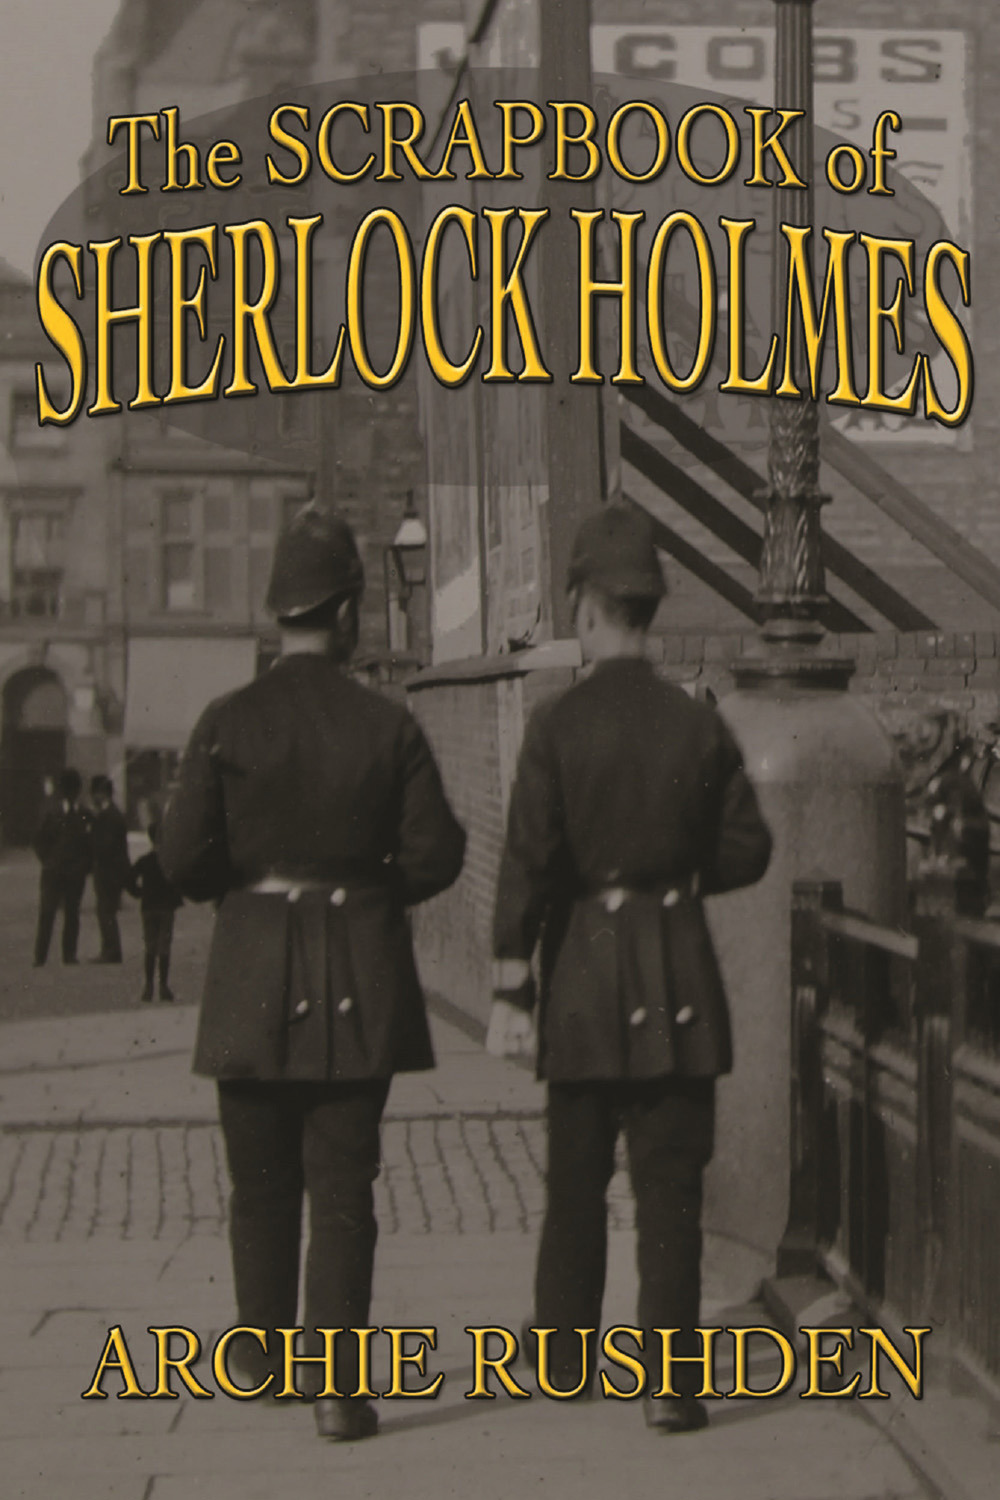 Rushden, Archie - The Scrapbook of Sherlock Holmes, ebook